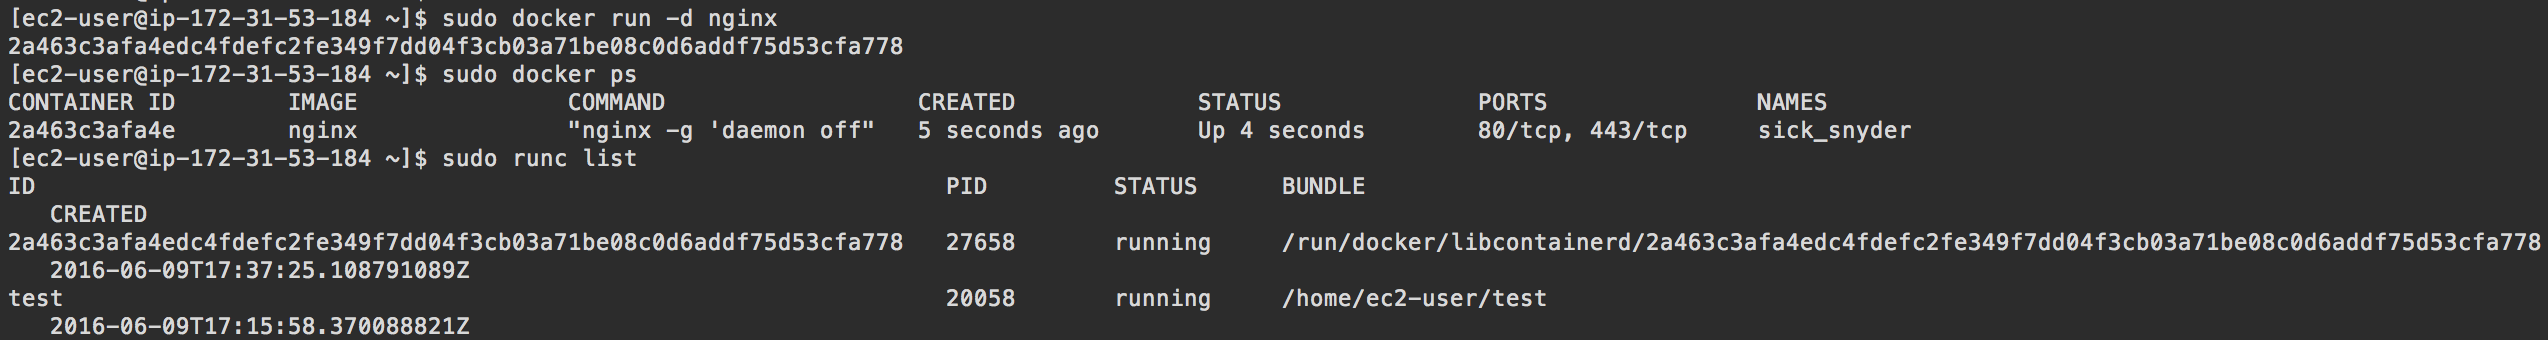 Comparing Docker to Runc